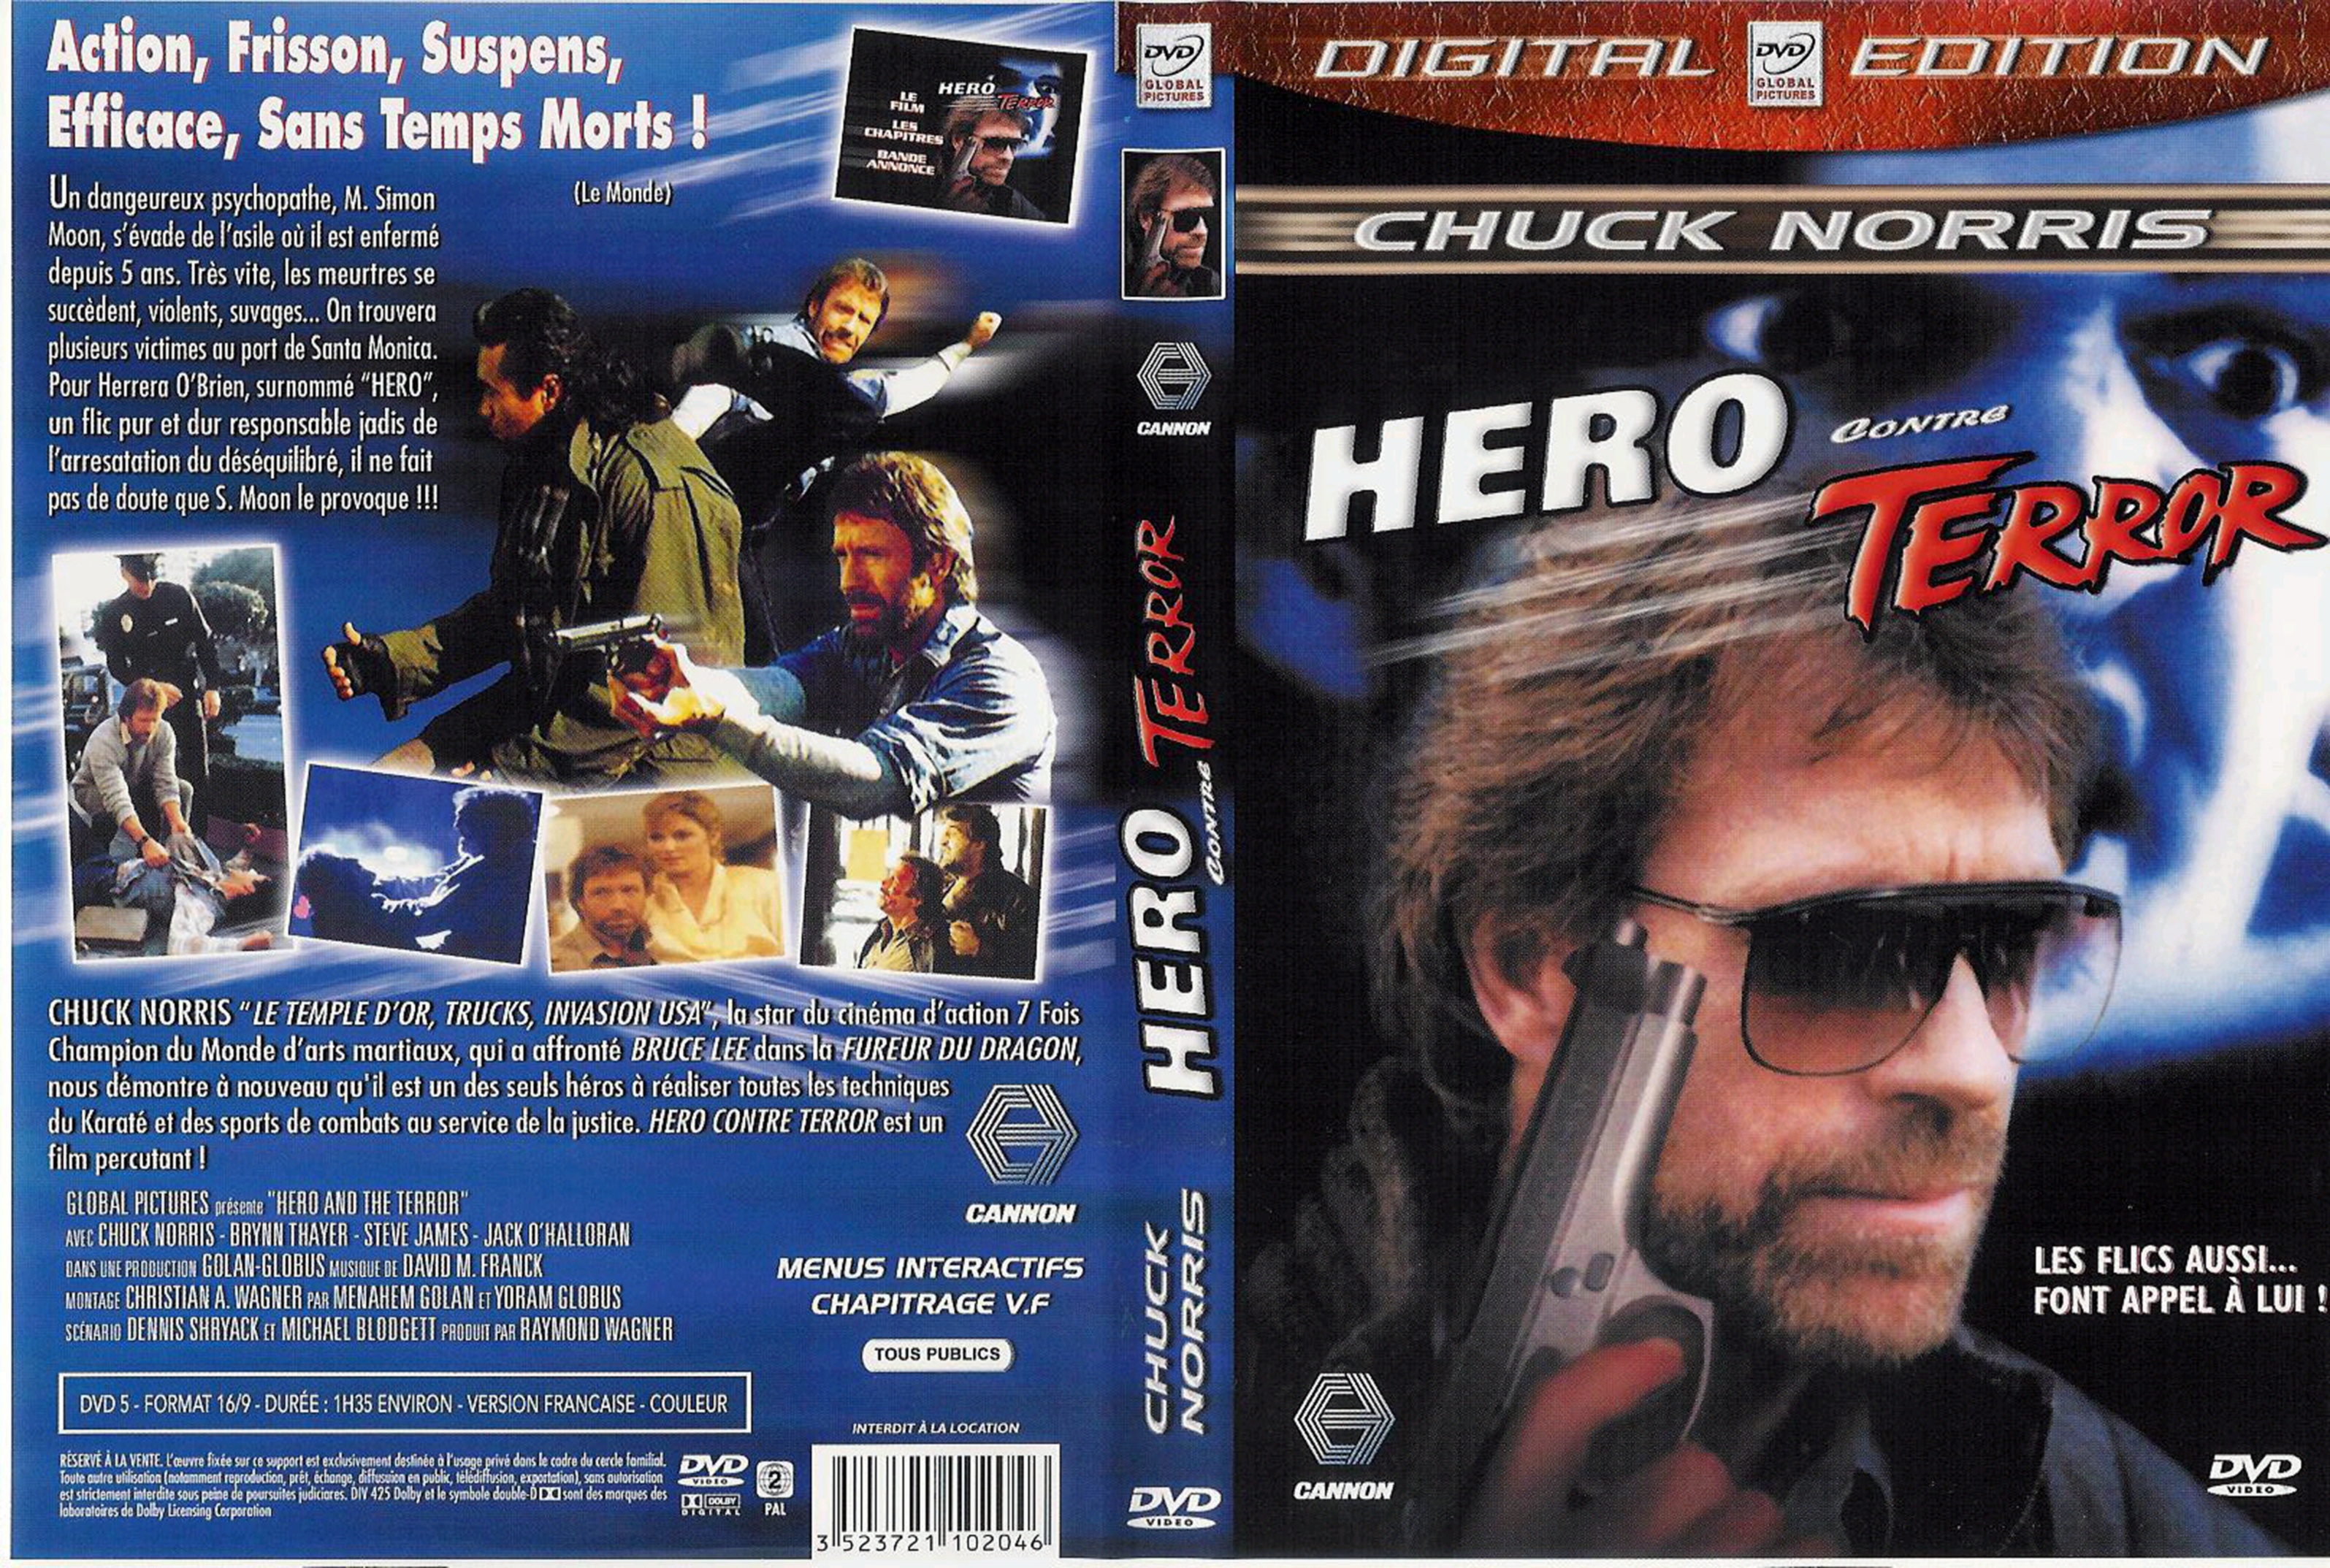 Jaquette DVD Hero contre terror